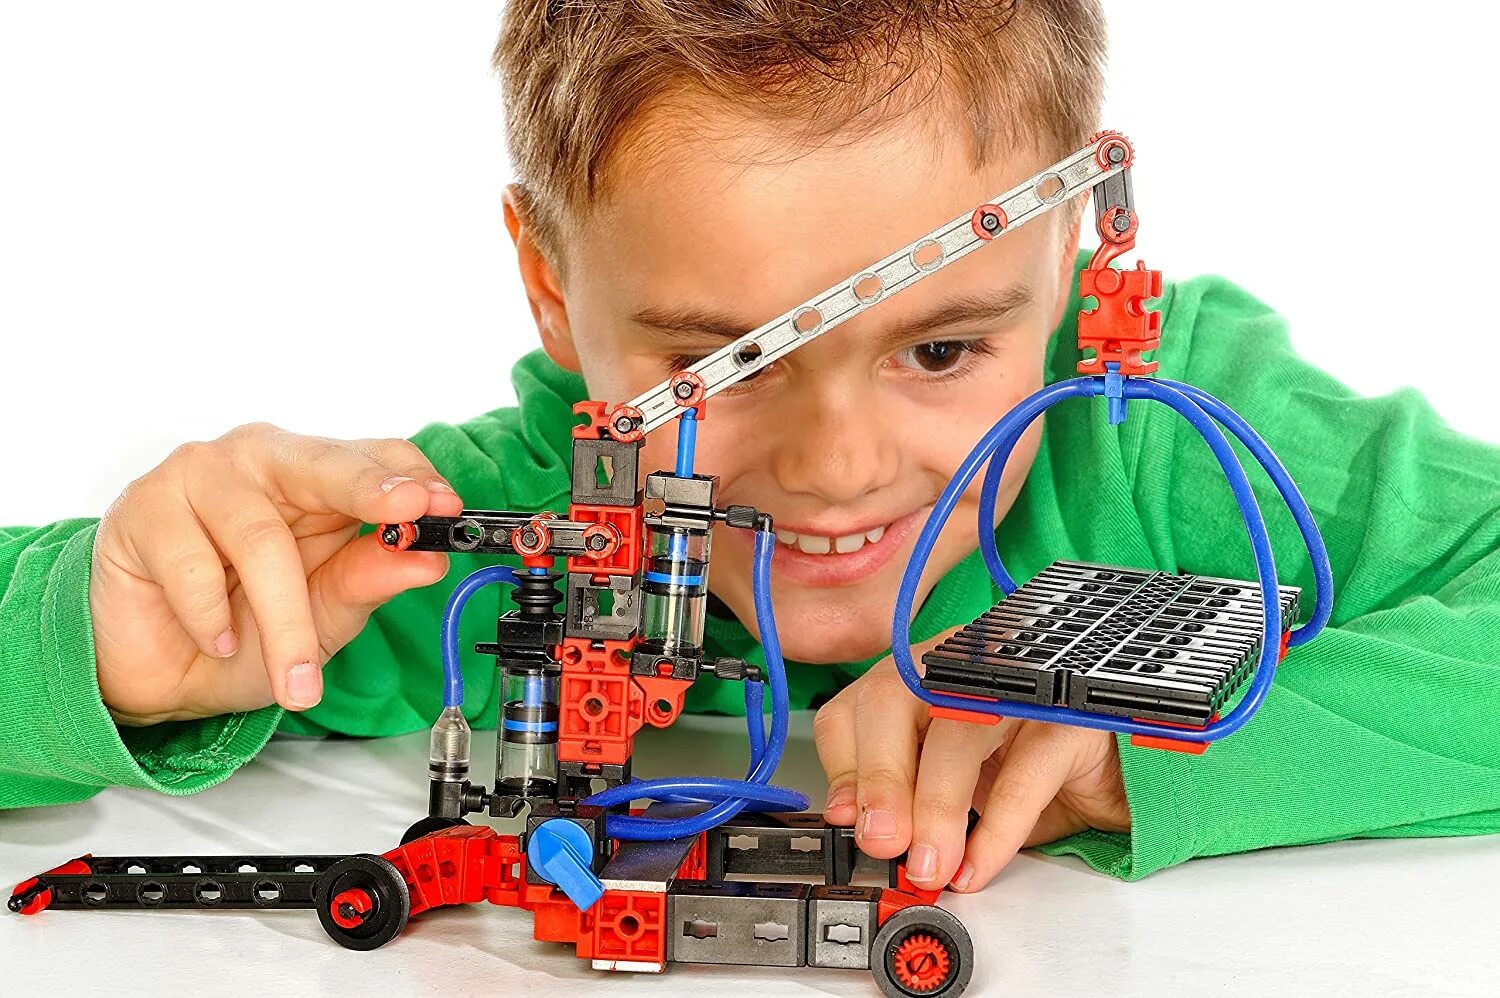 Fischertechnik pneumatic Power building Kit. Робототехника для детей. Конструктор для детей.